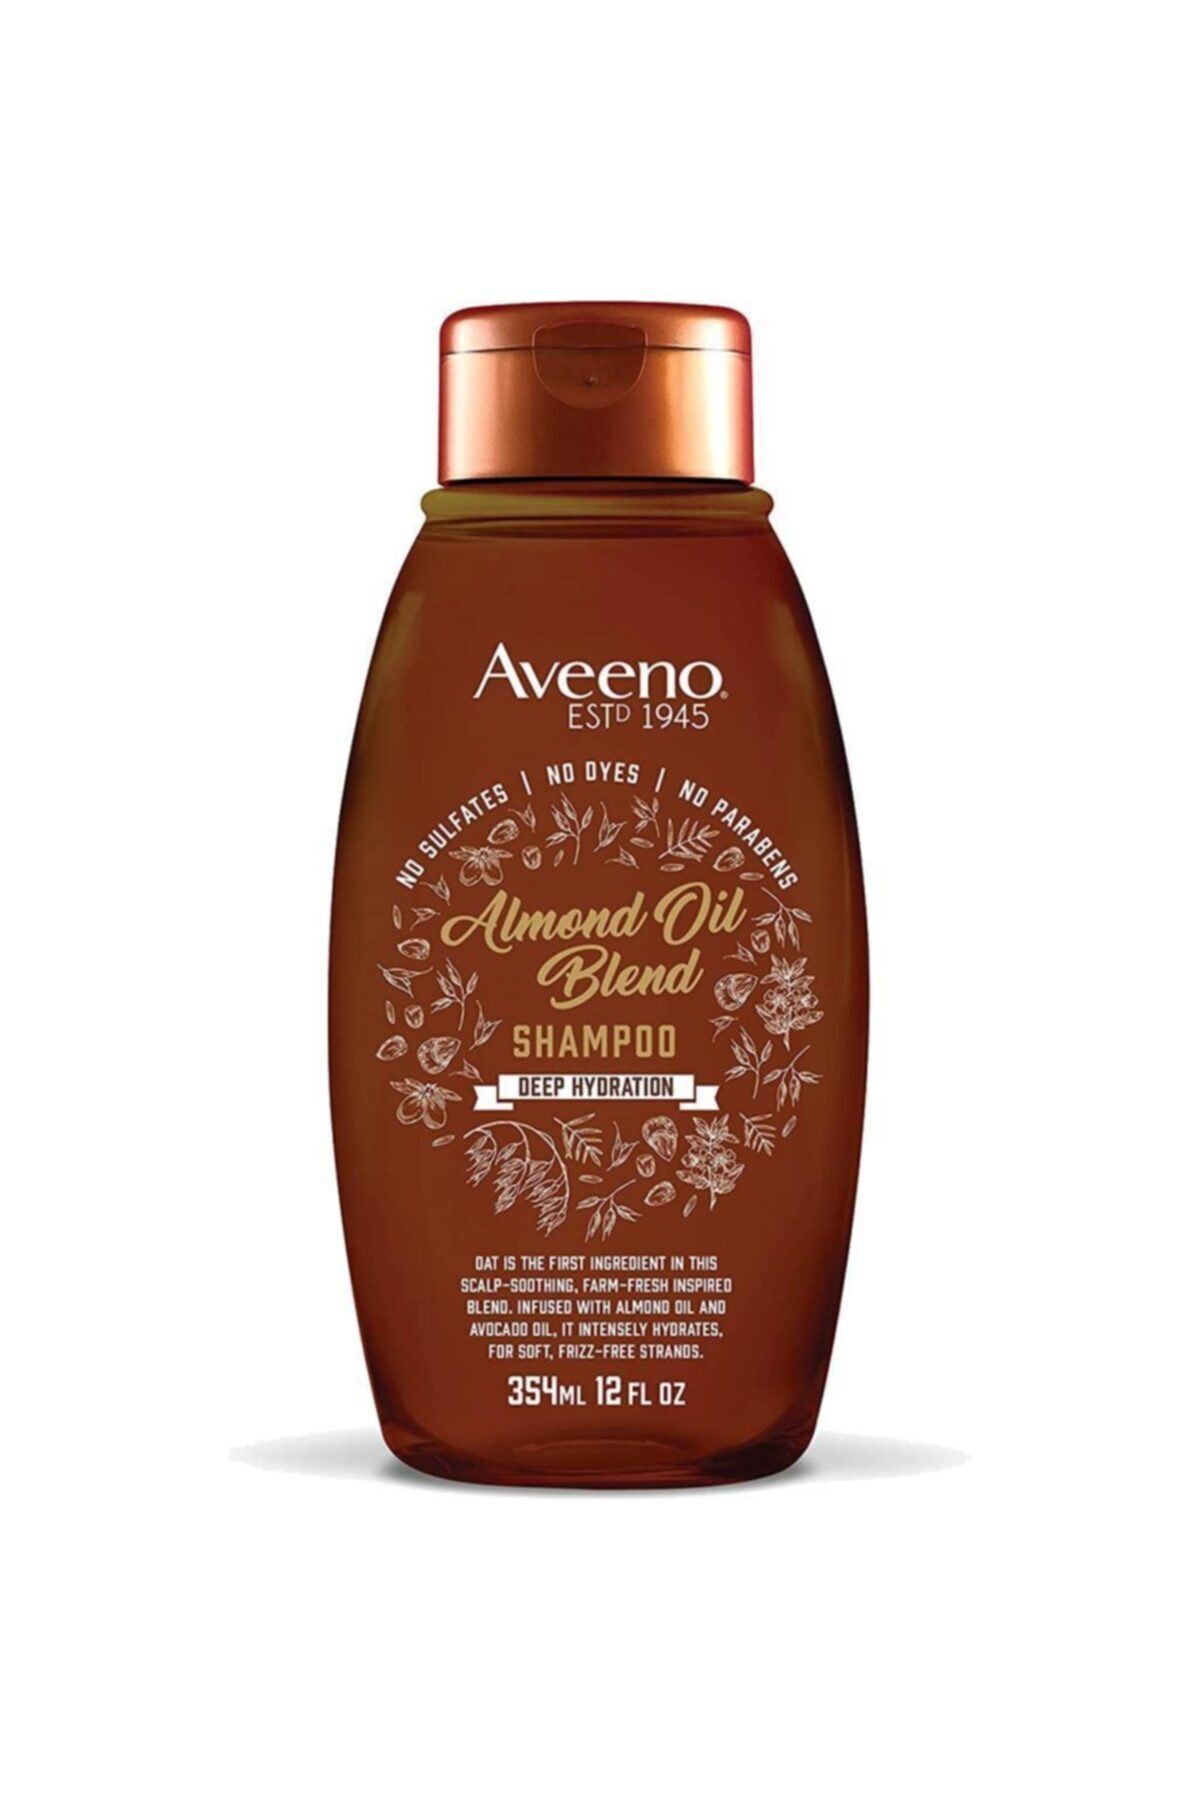 AVEENO Almond Oil Blend Şampuan 354ml